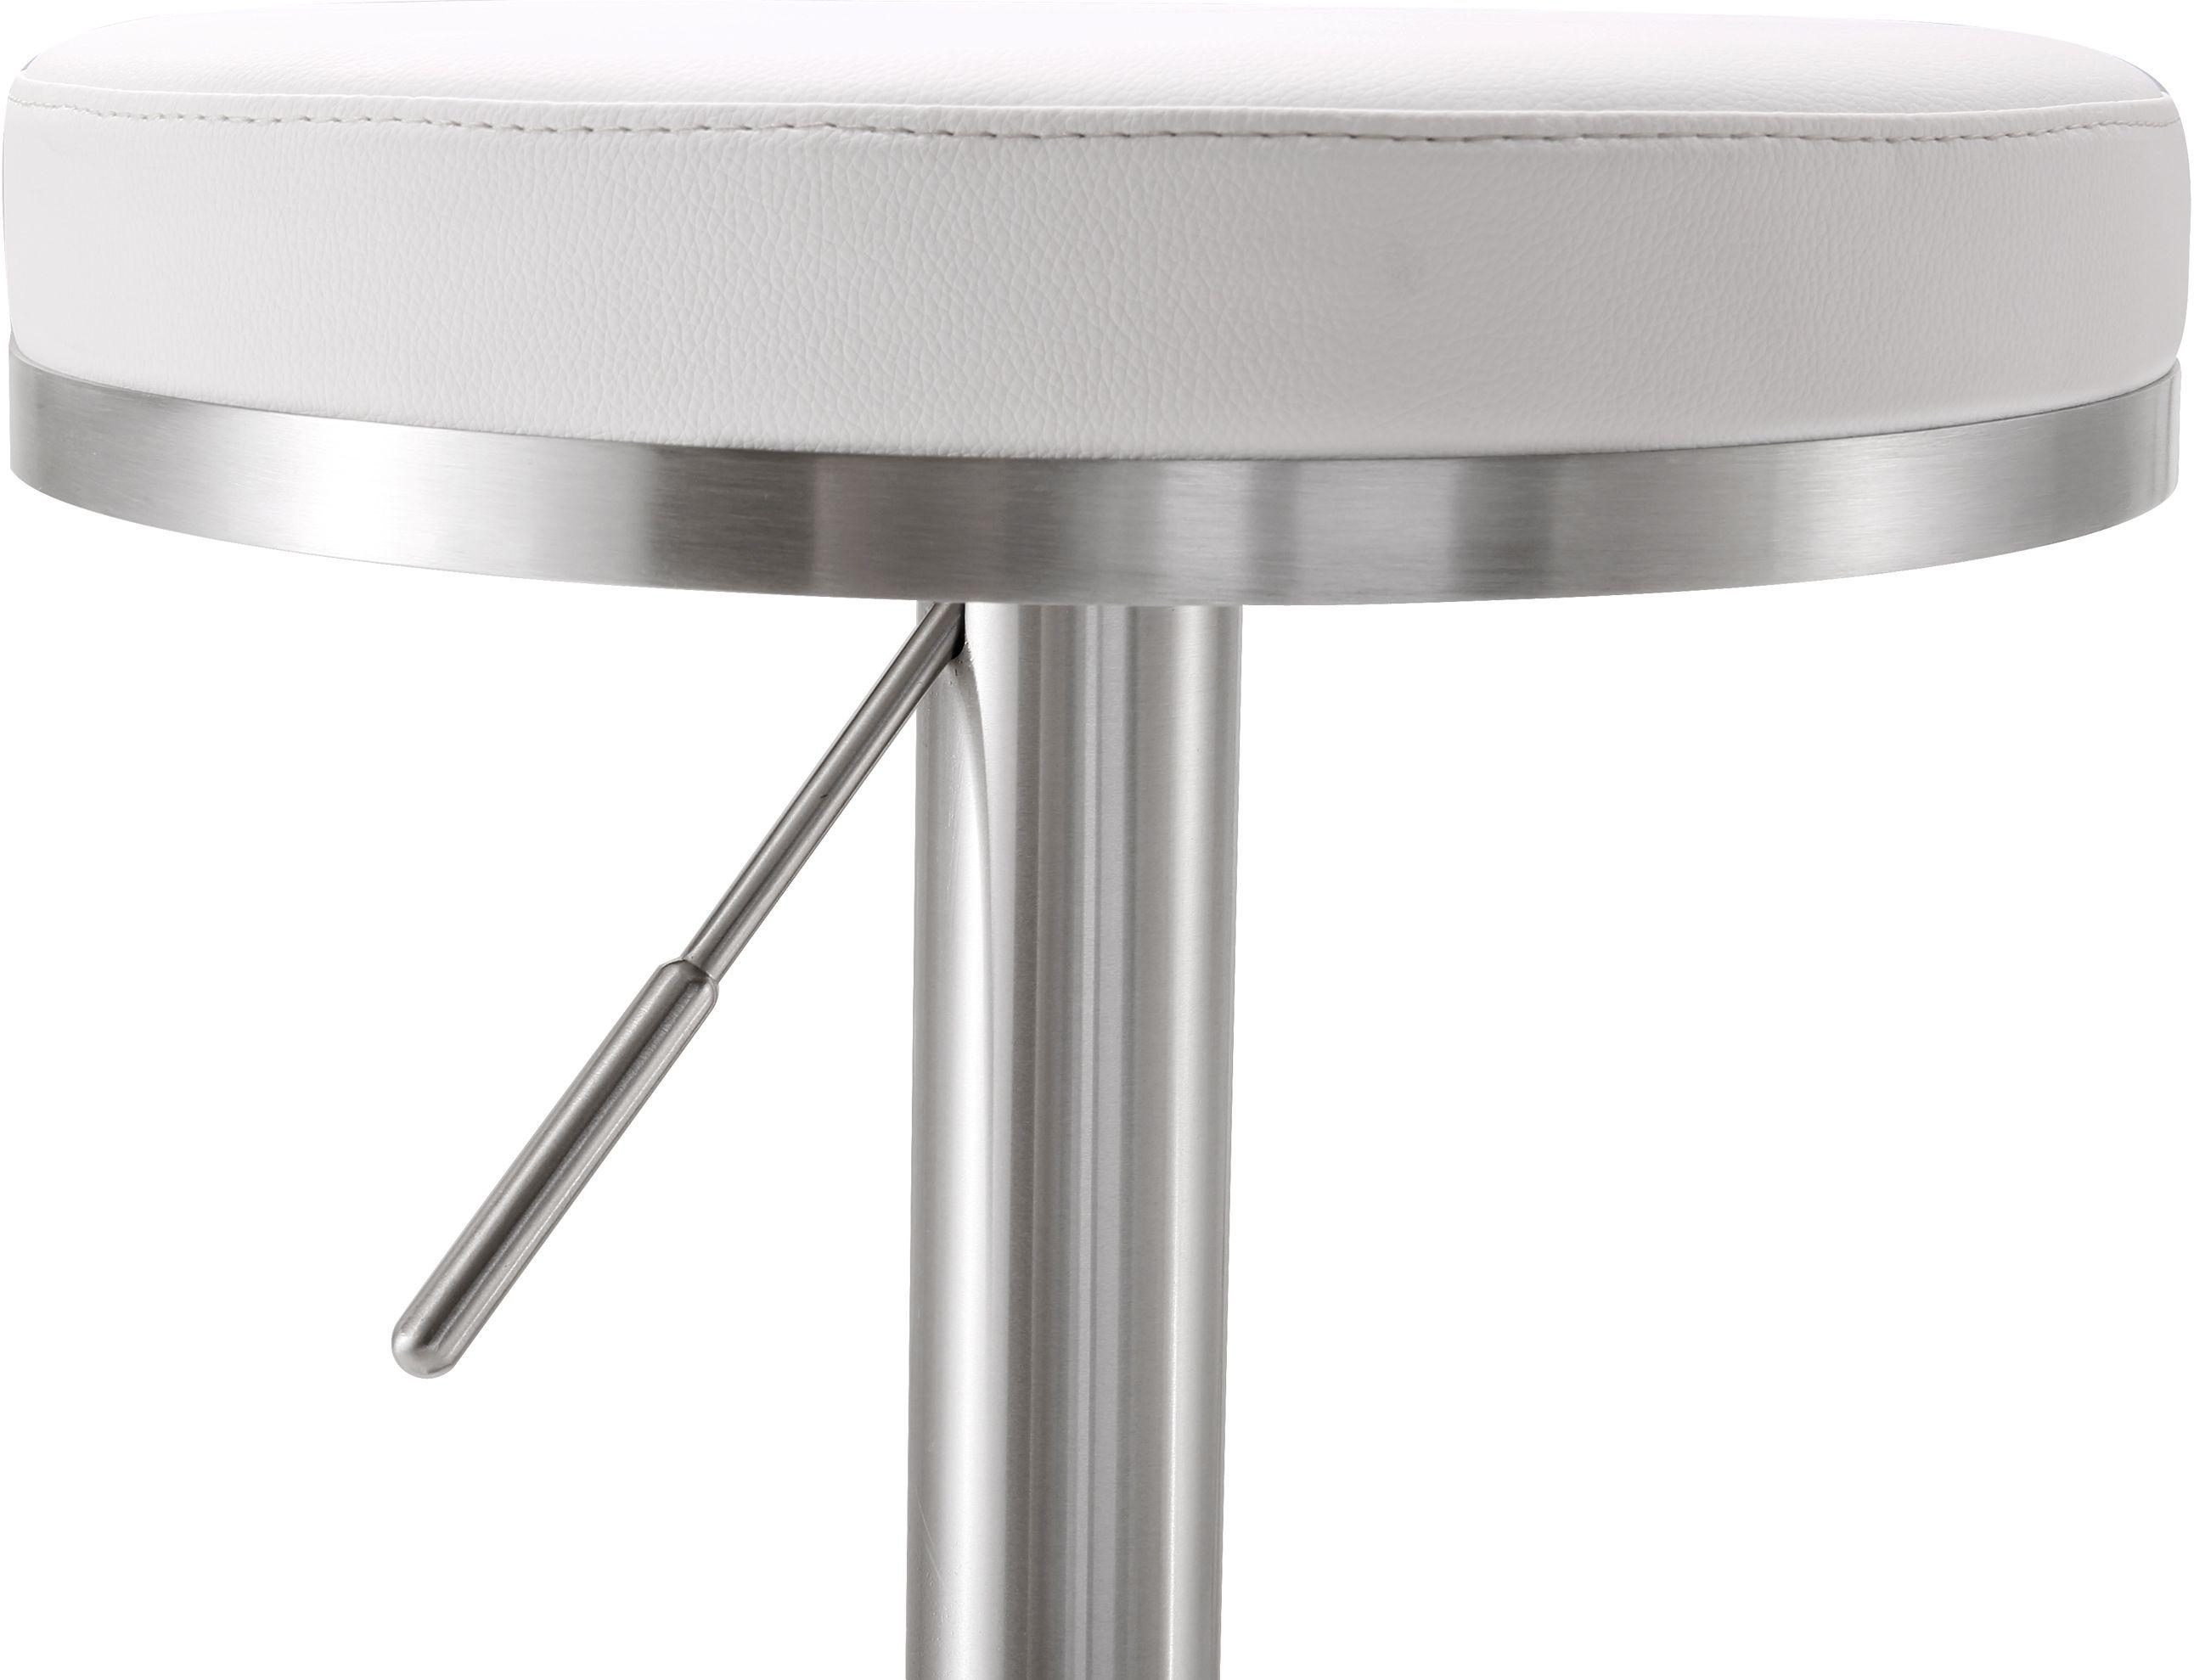 Fano White Stainless Steel Adjustable Barstool - Image 6